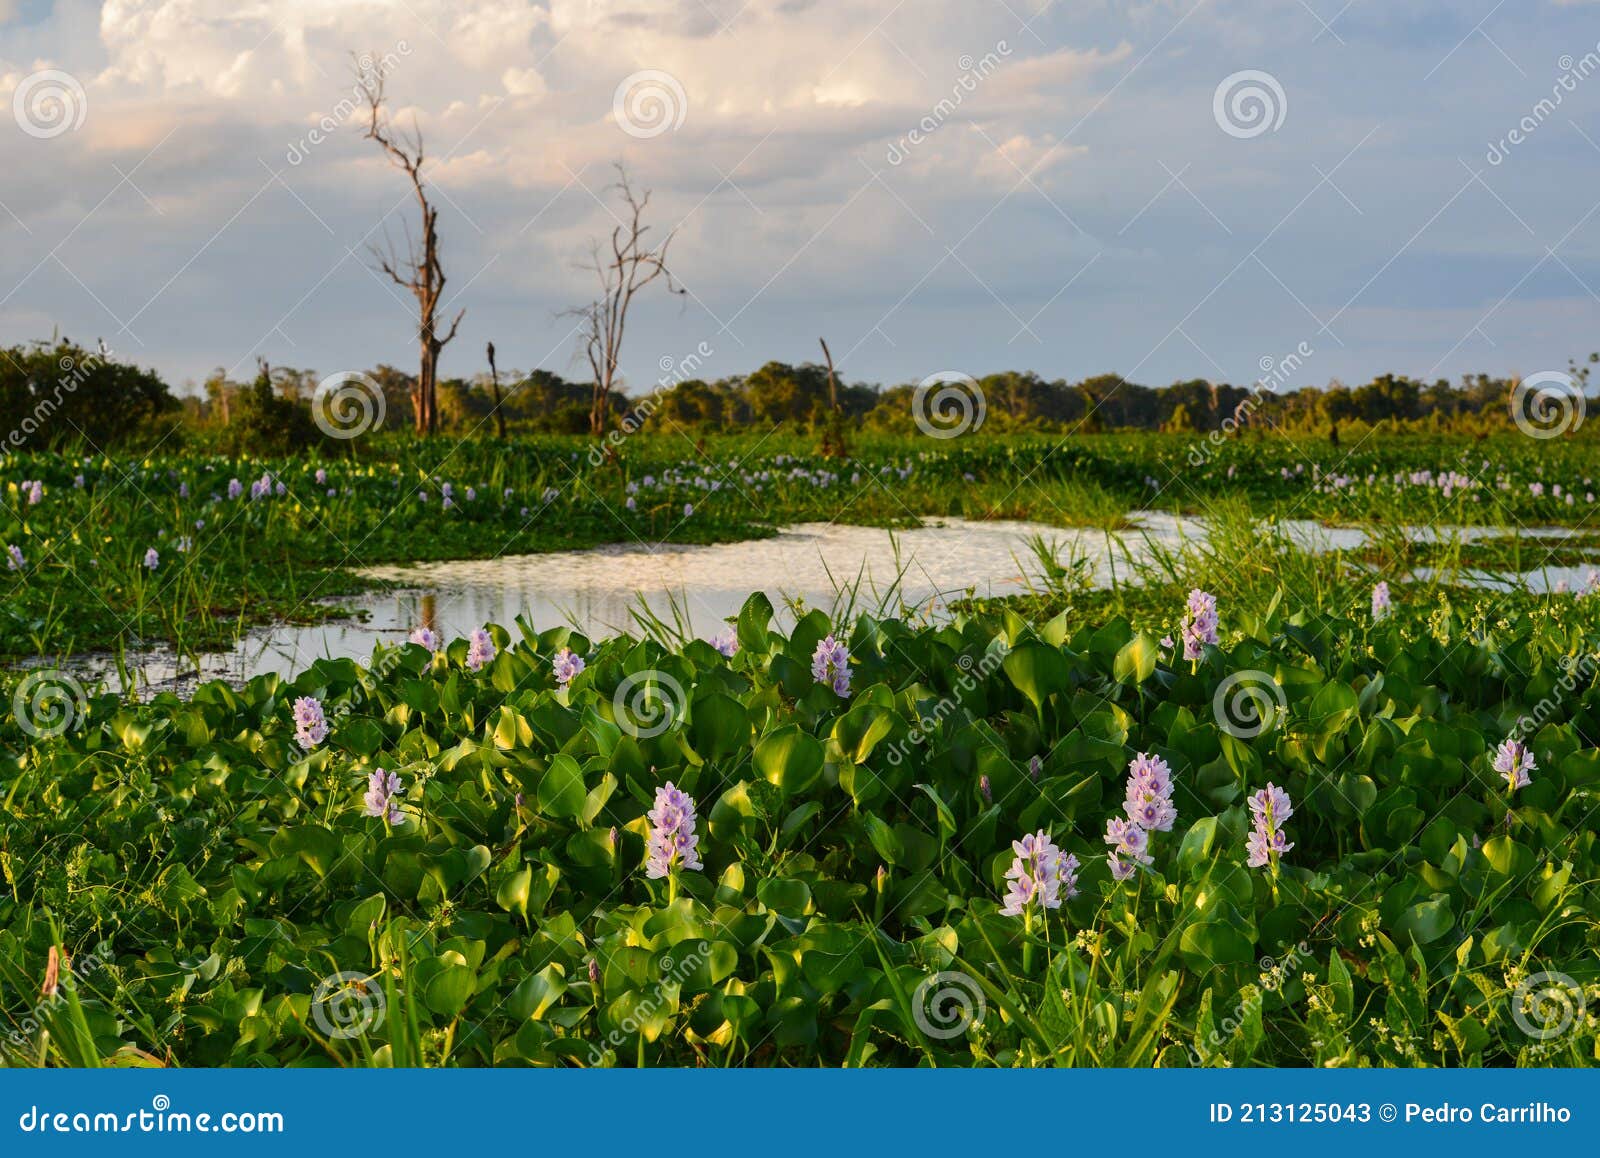 beautiful wetlands of the guaporÃÂ©-itenez